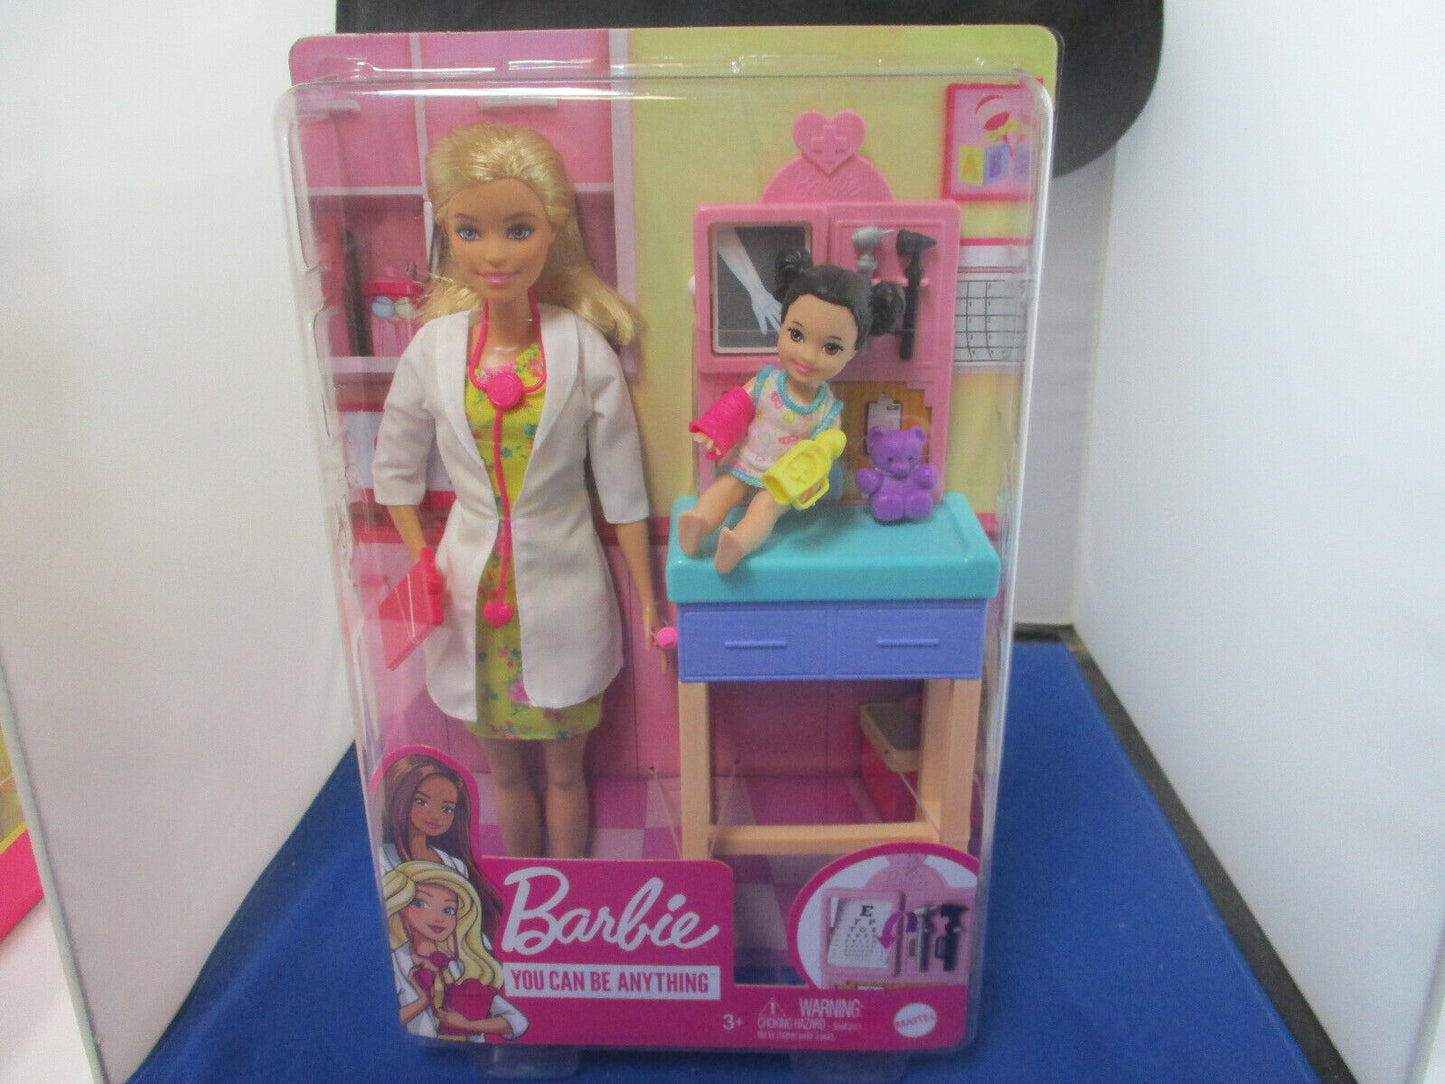 Barbie - Pediatrician Doll Playset